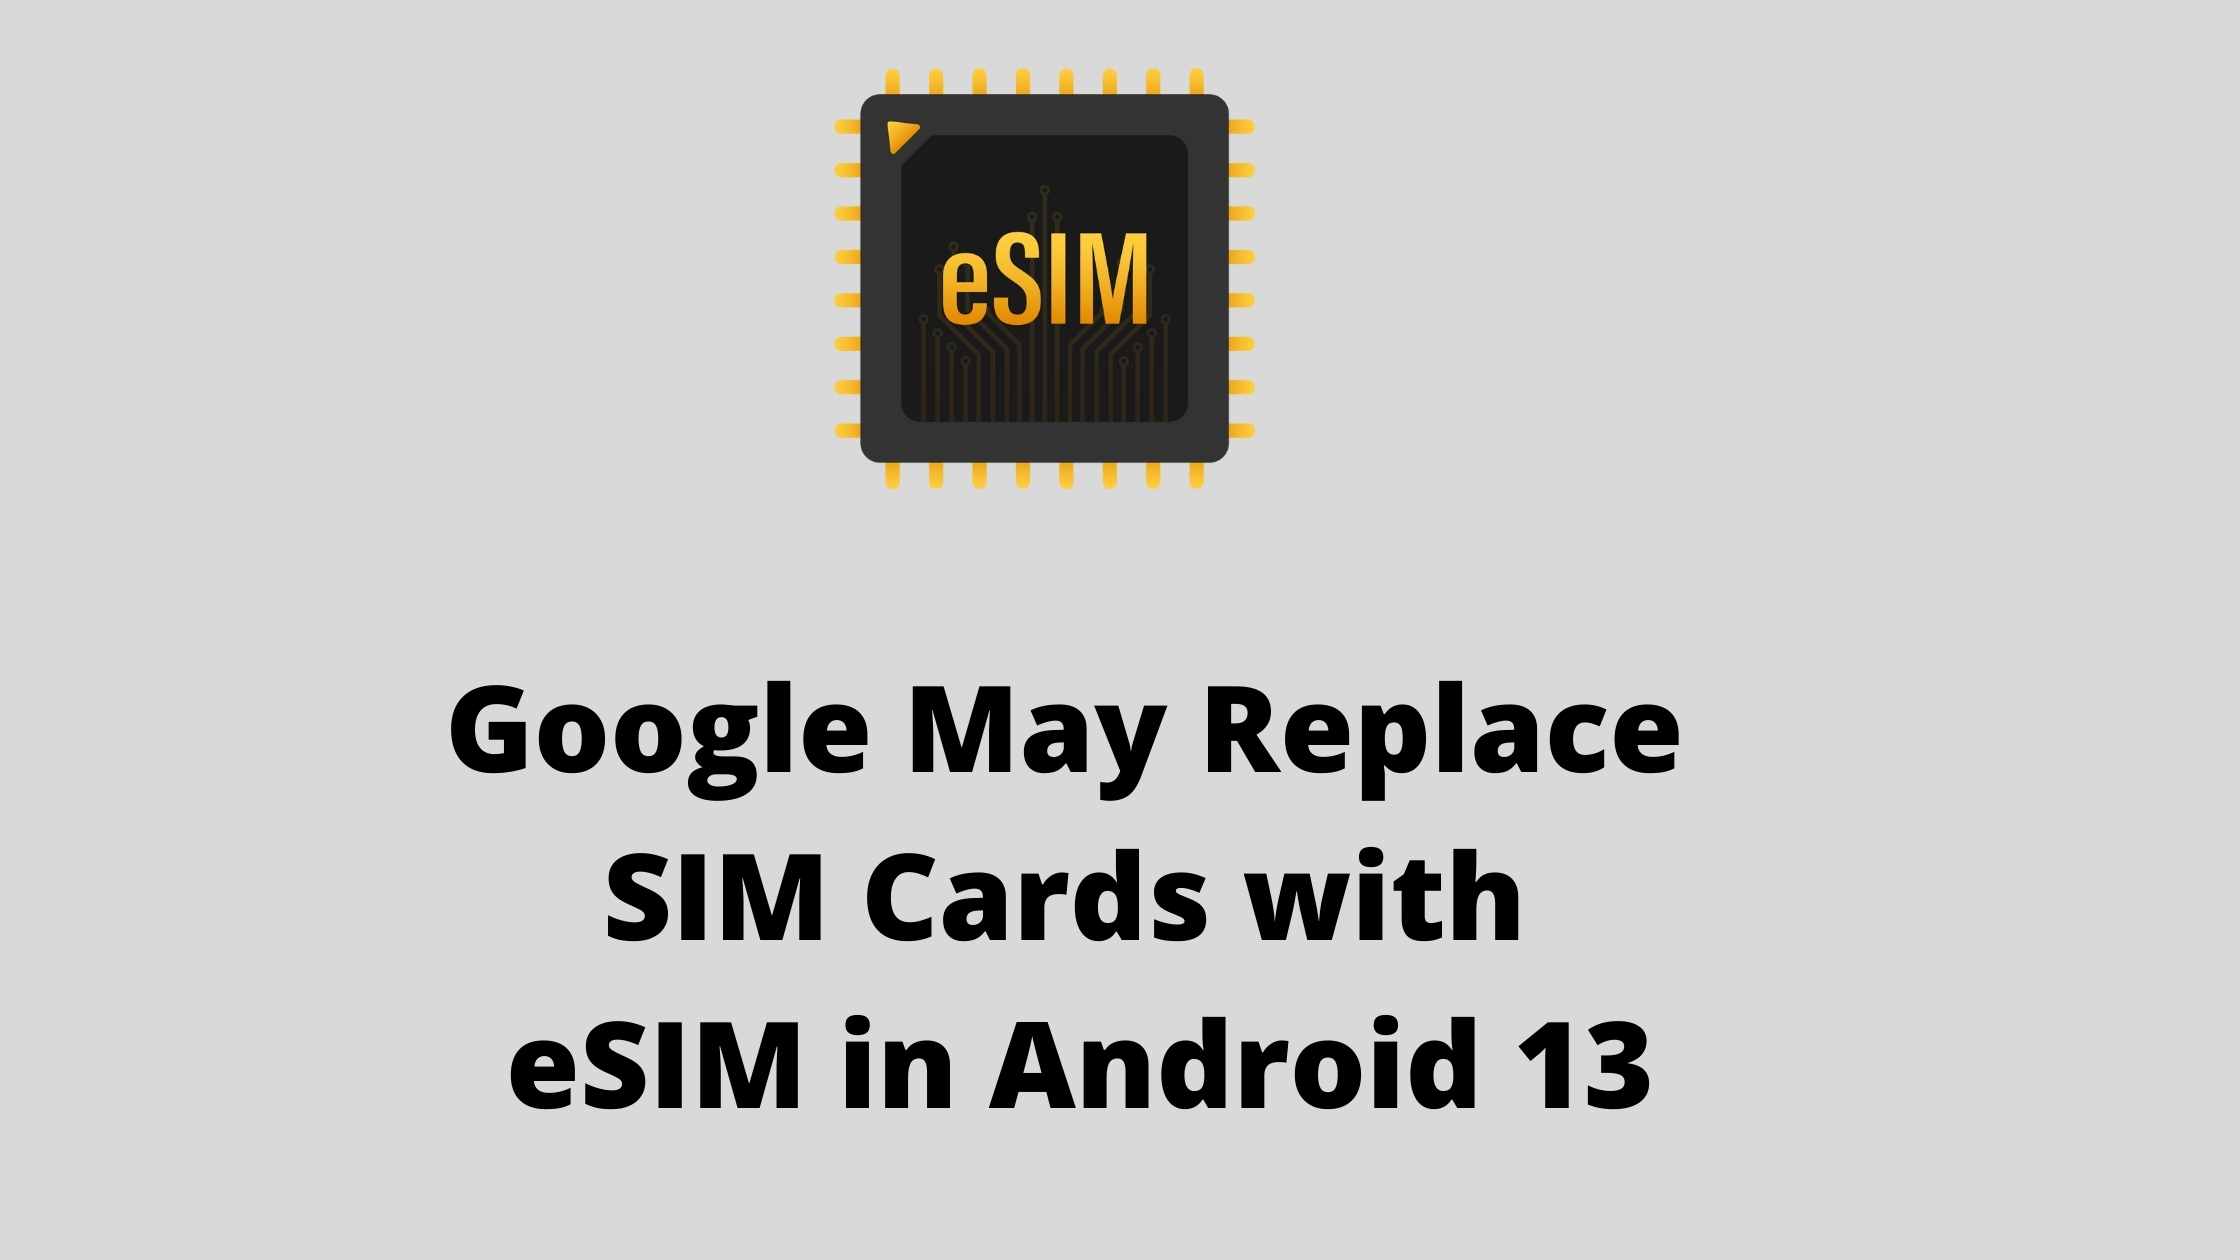 Google may replace SIM cards with eSIM